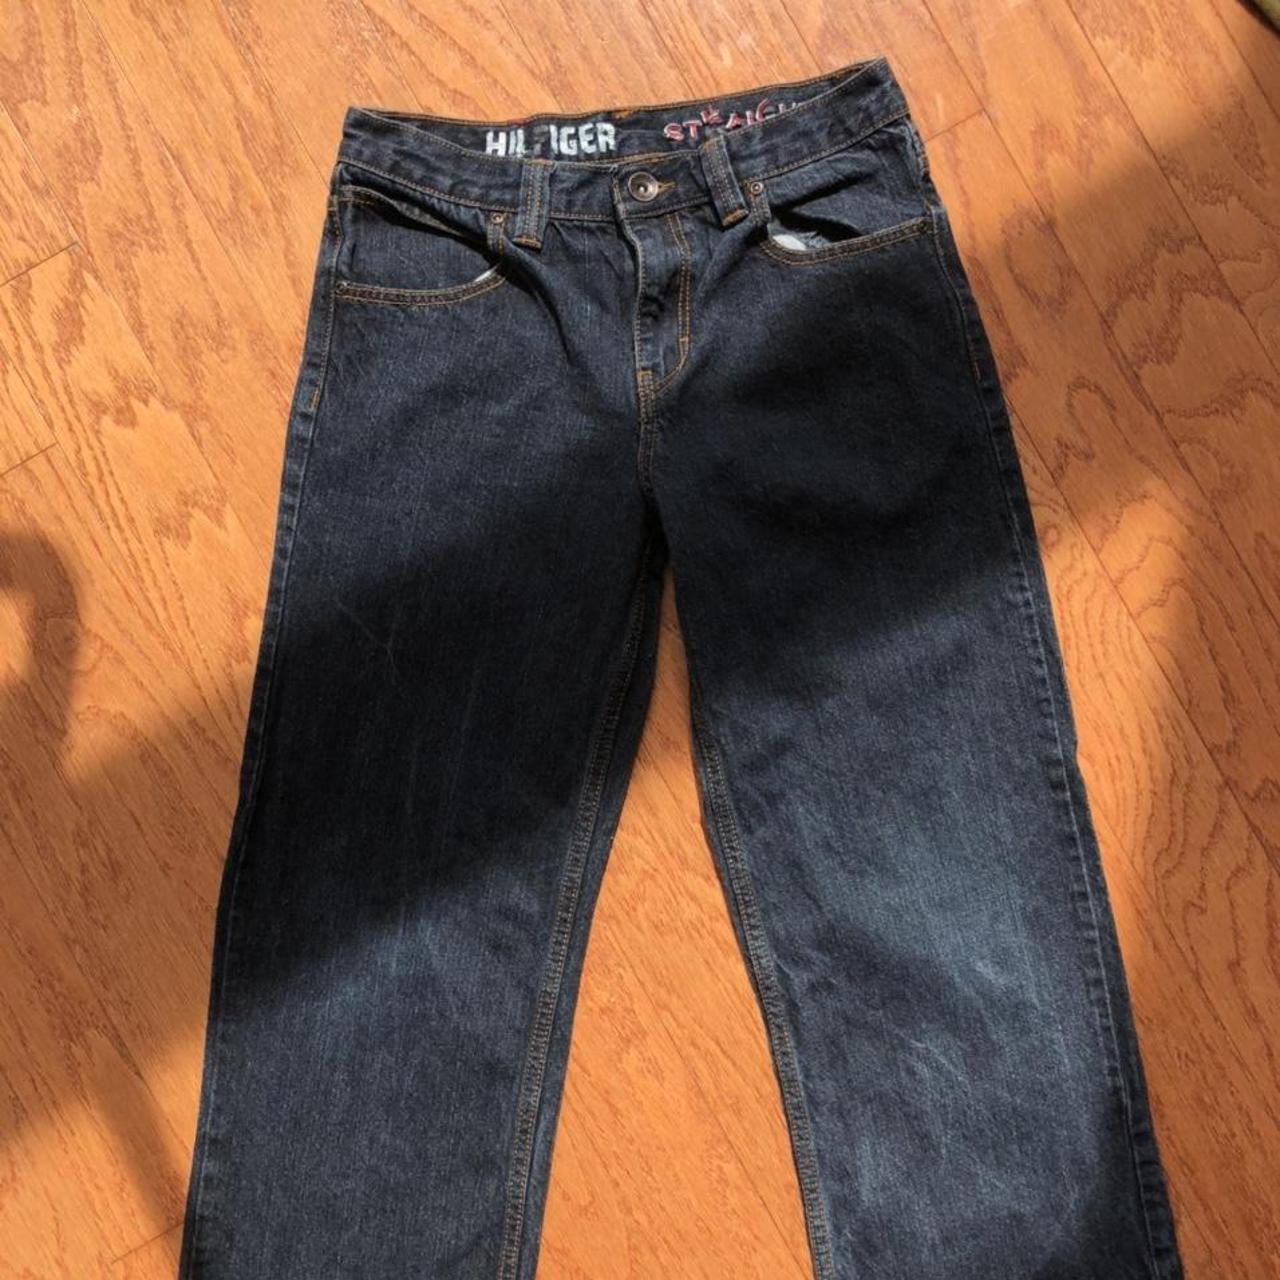 Product Image 4 - Vintage Tommy Hilfiger jeans!
- great